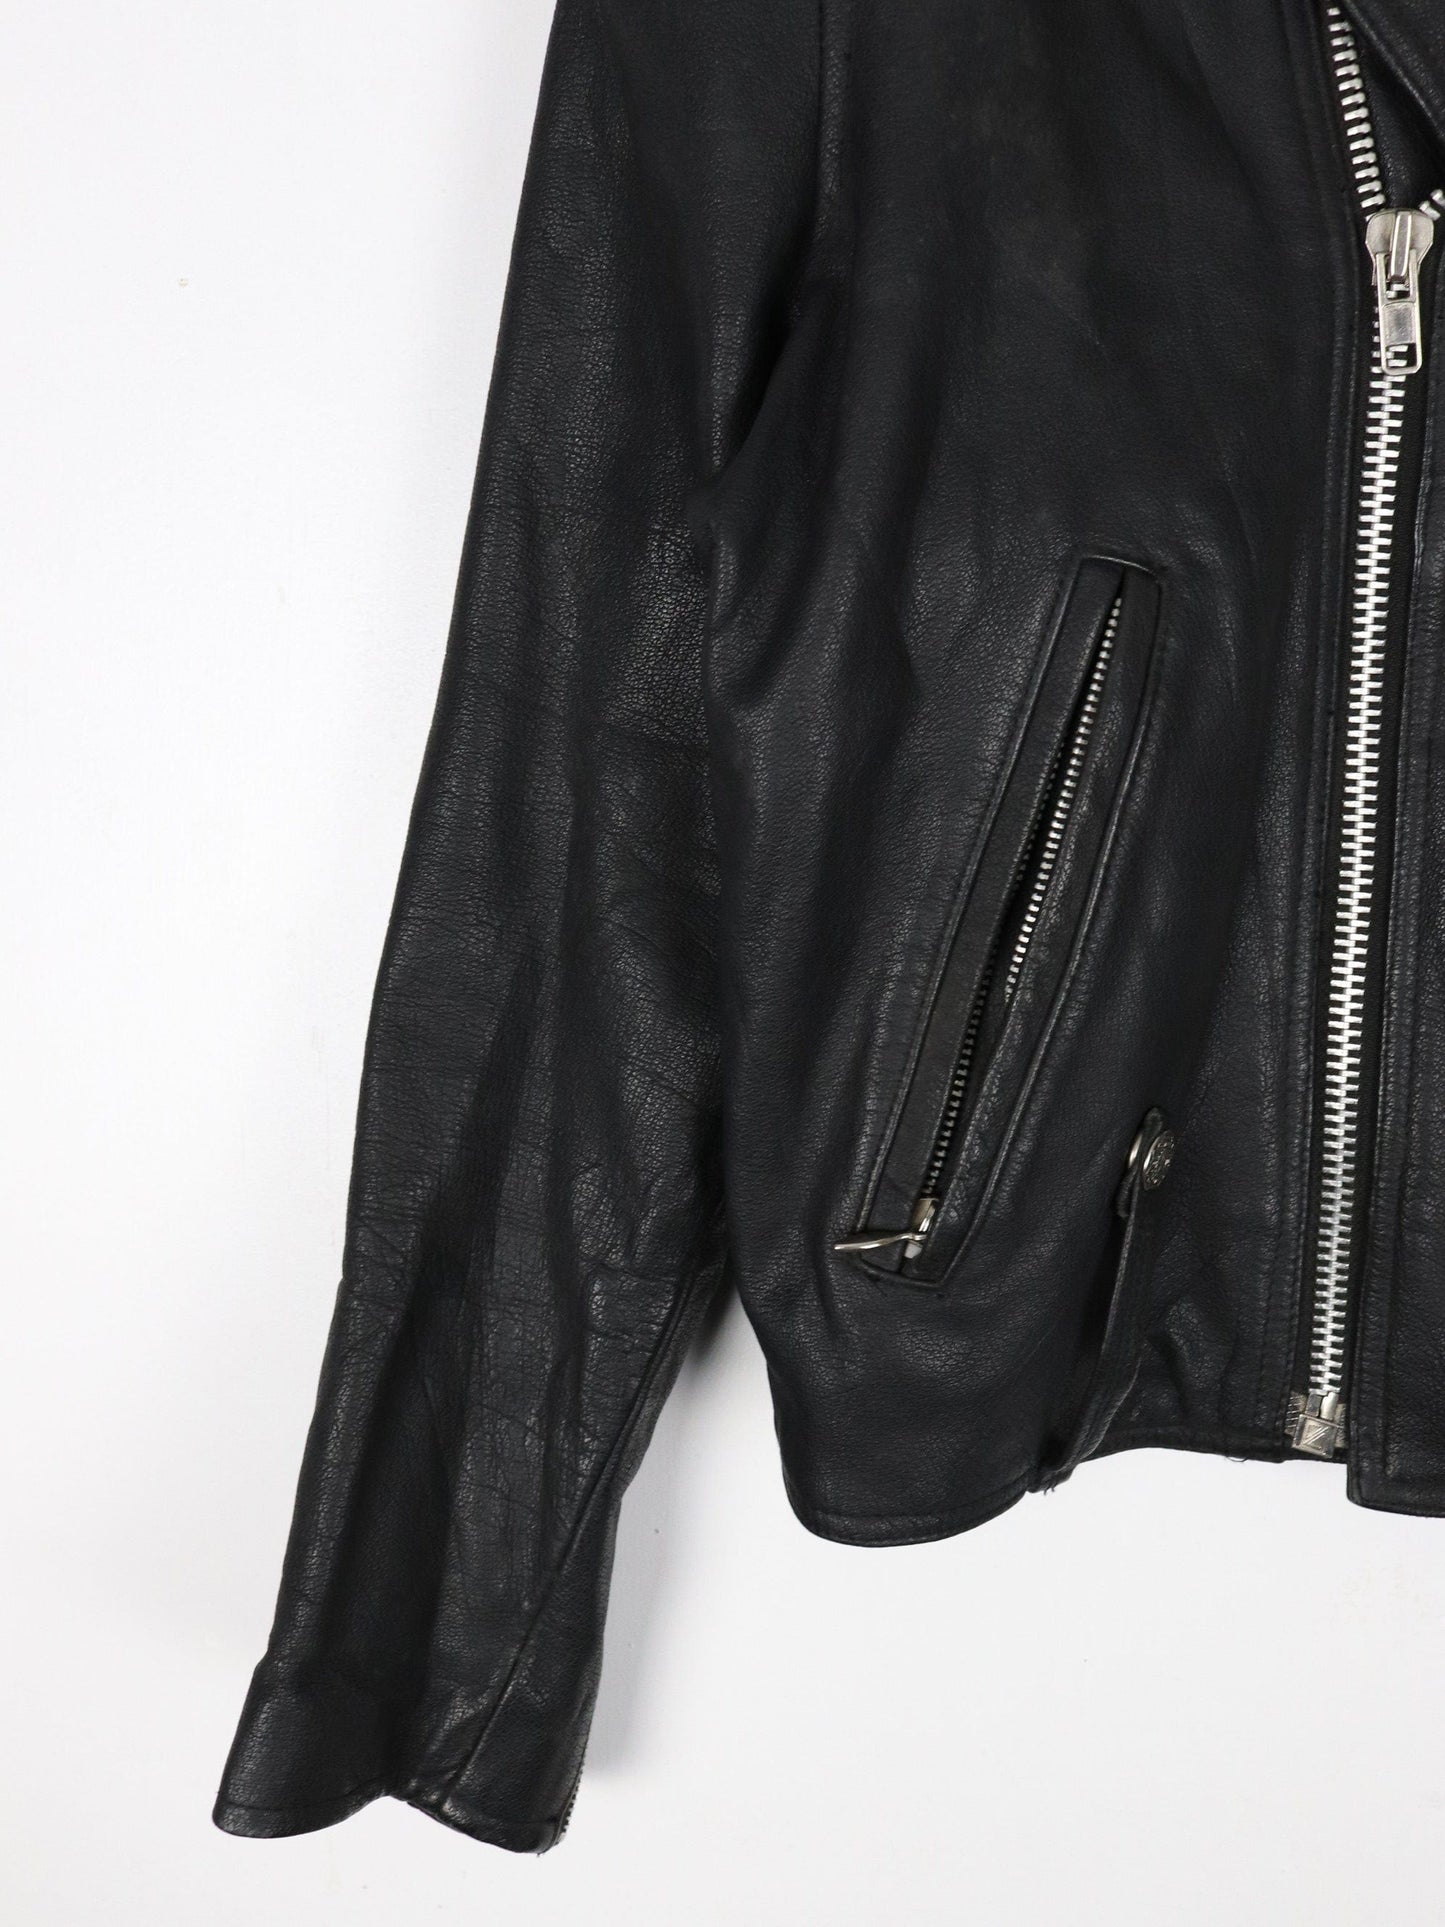 Other Jackets & Coats Vintage Leather Jacket Mens 42 Medium Black Biker Moto